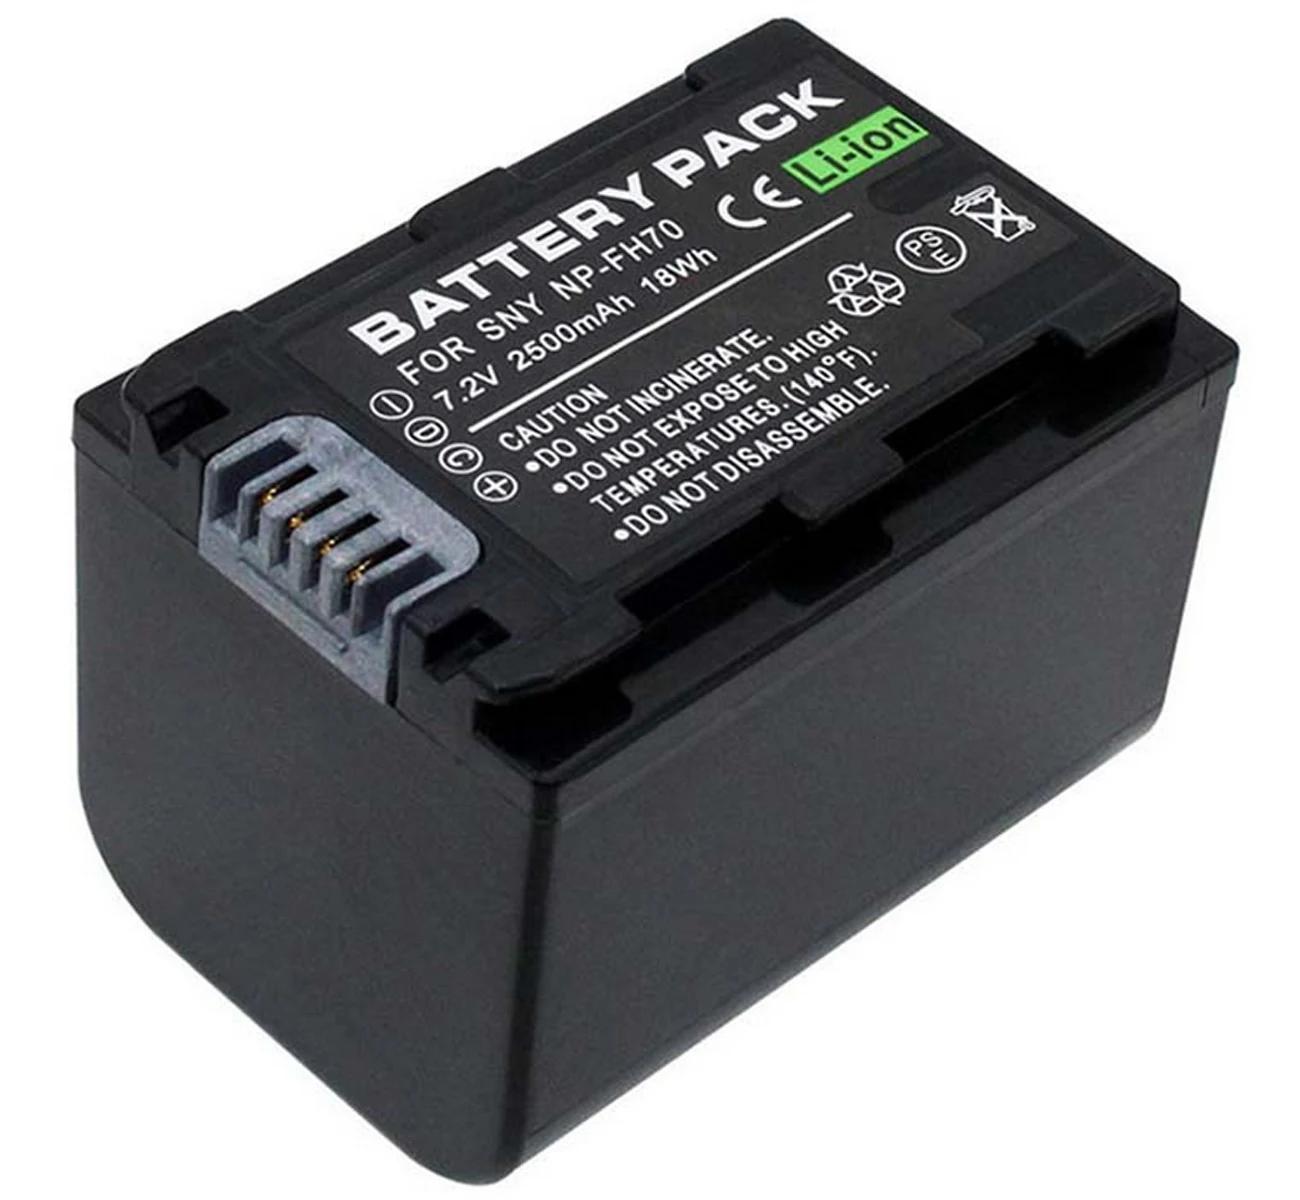 

Battery Pack for Sony DCR-SX30, DCR-SX31, DCR-SX40, DCR-SX41, DCR-SX50, DCR-SX60 Handycam Camcorder